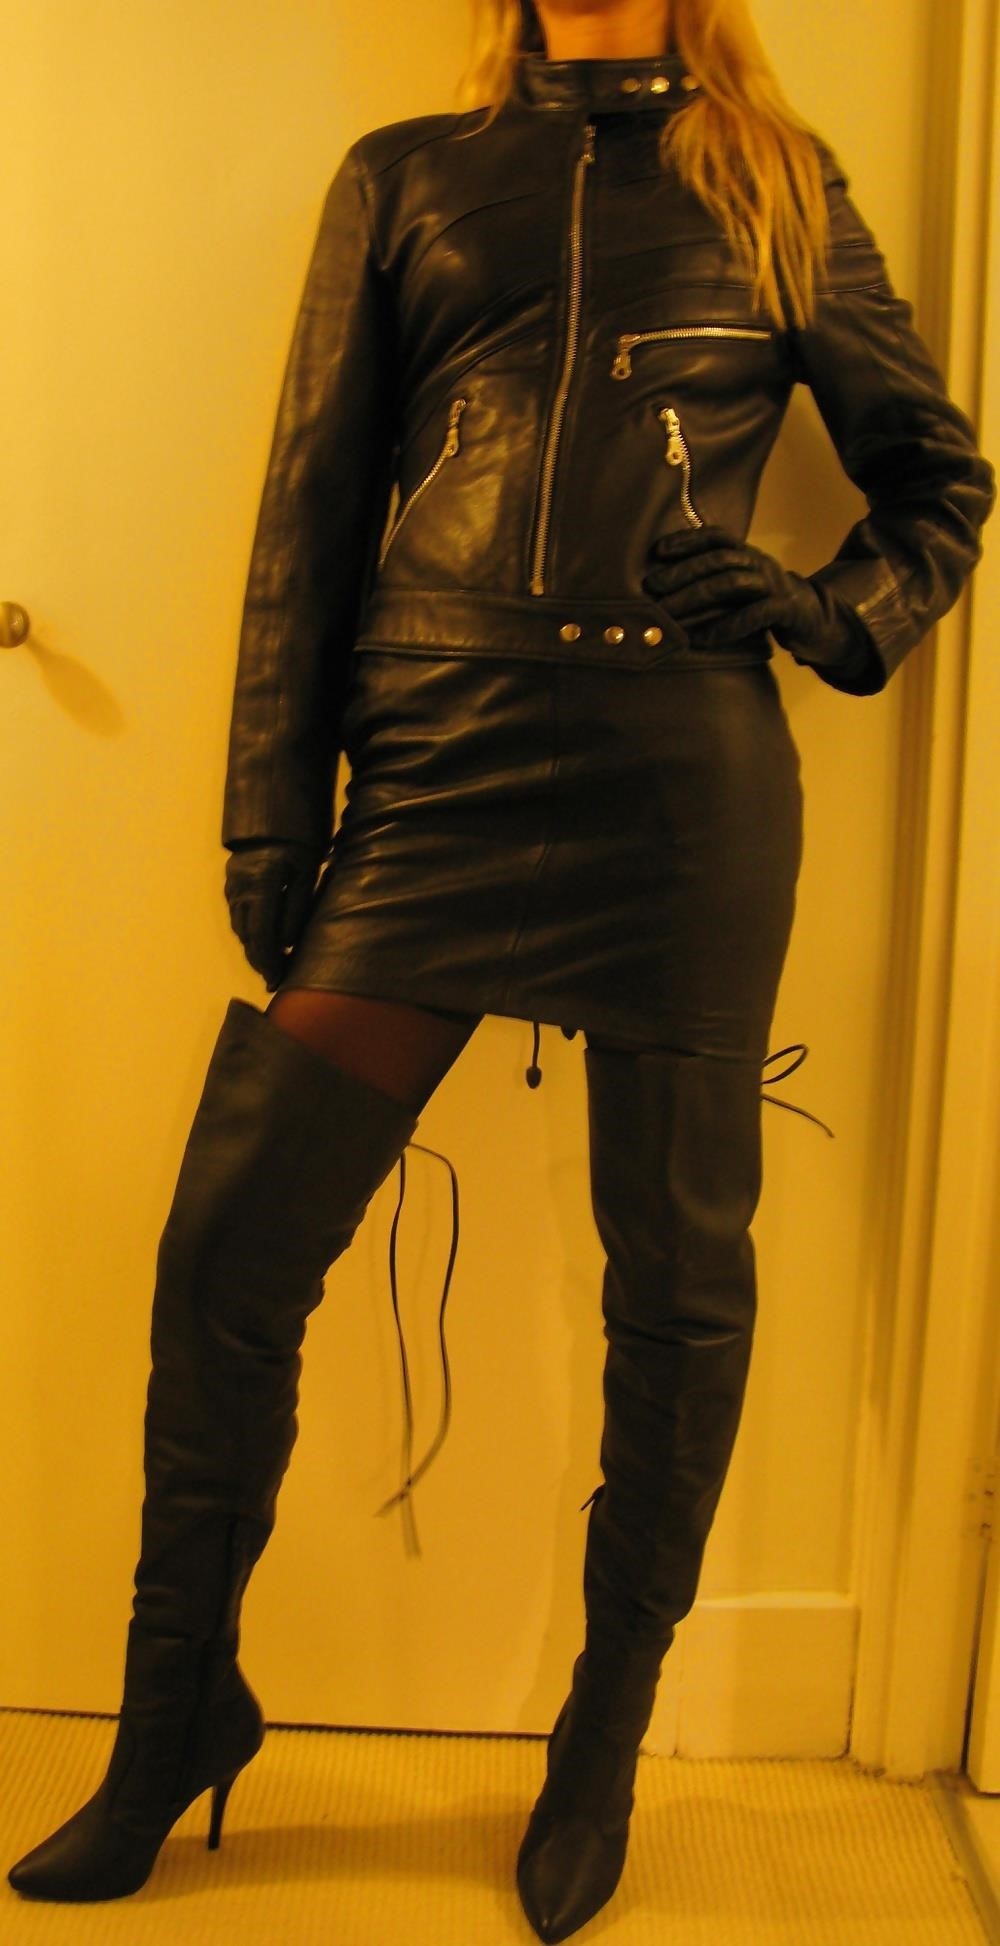 Leather girl bdsm-7496